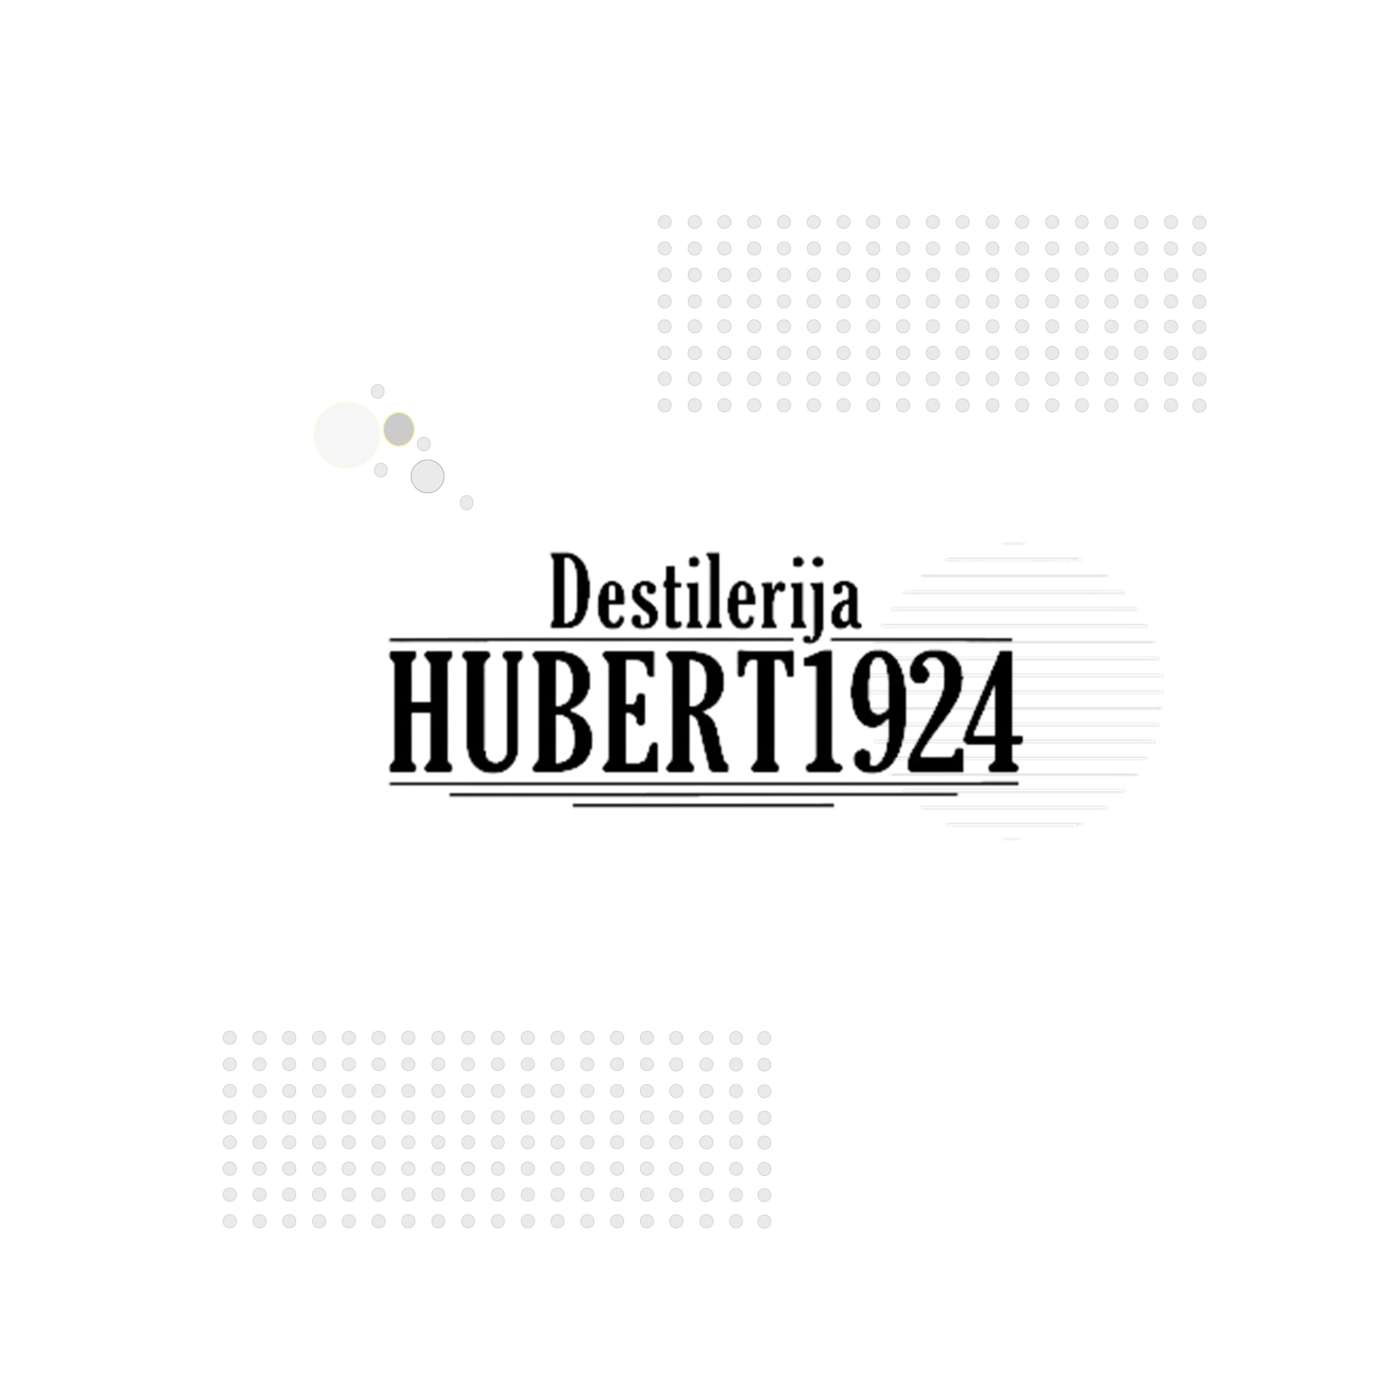 Destilerija Hubert